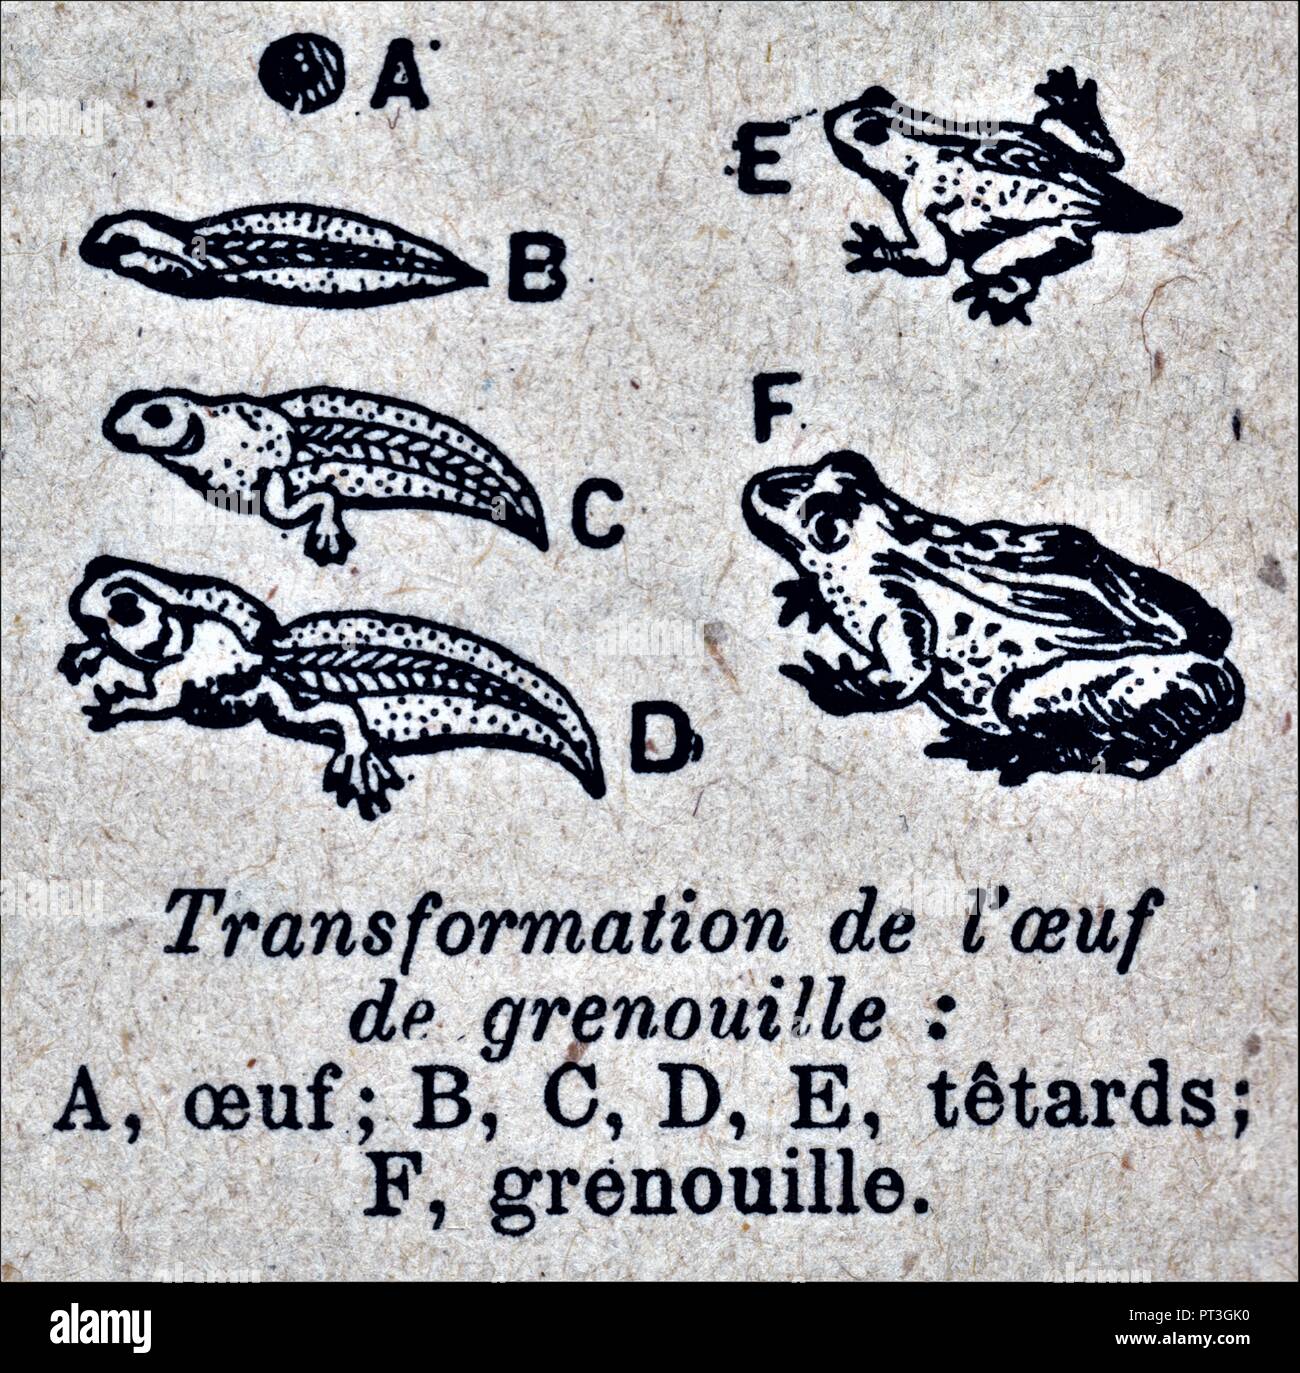 TRANSFORMATION DE L'OEUF DE GRENOUILLE. Stock Photo